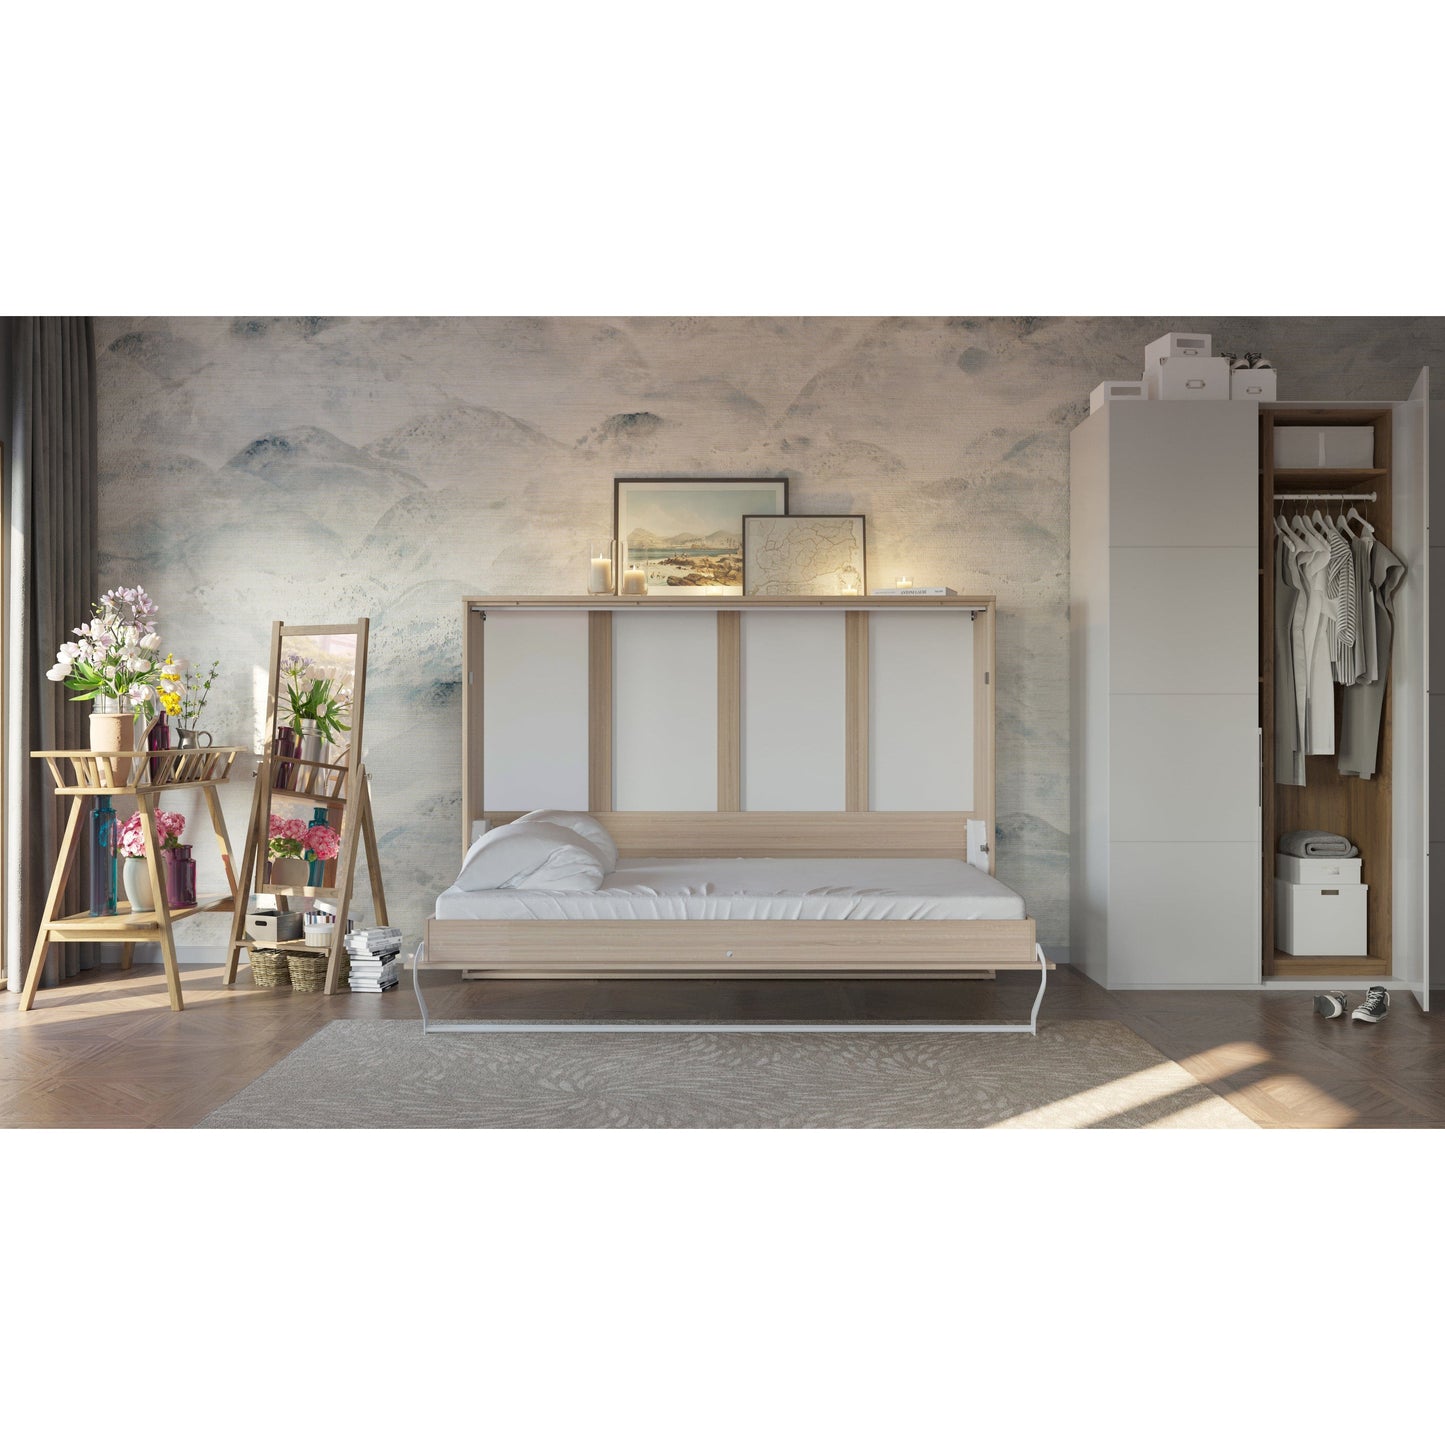 Maxima House European Horizontal Twin Size Murphy Bed Brescia with mattress